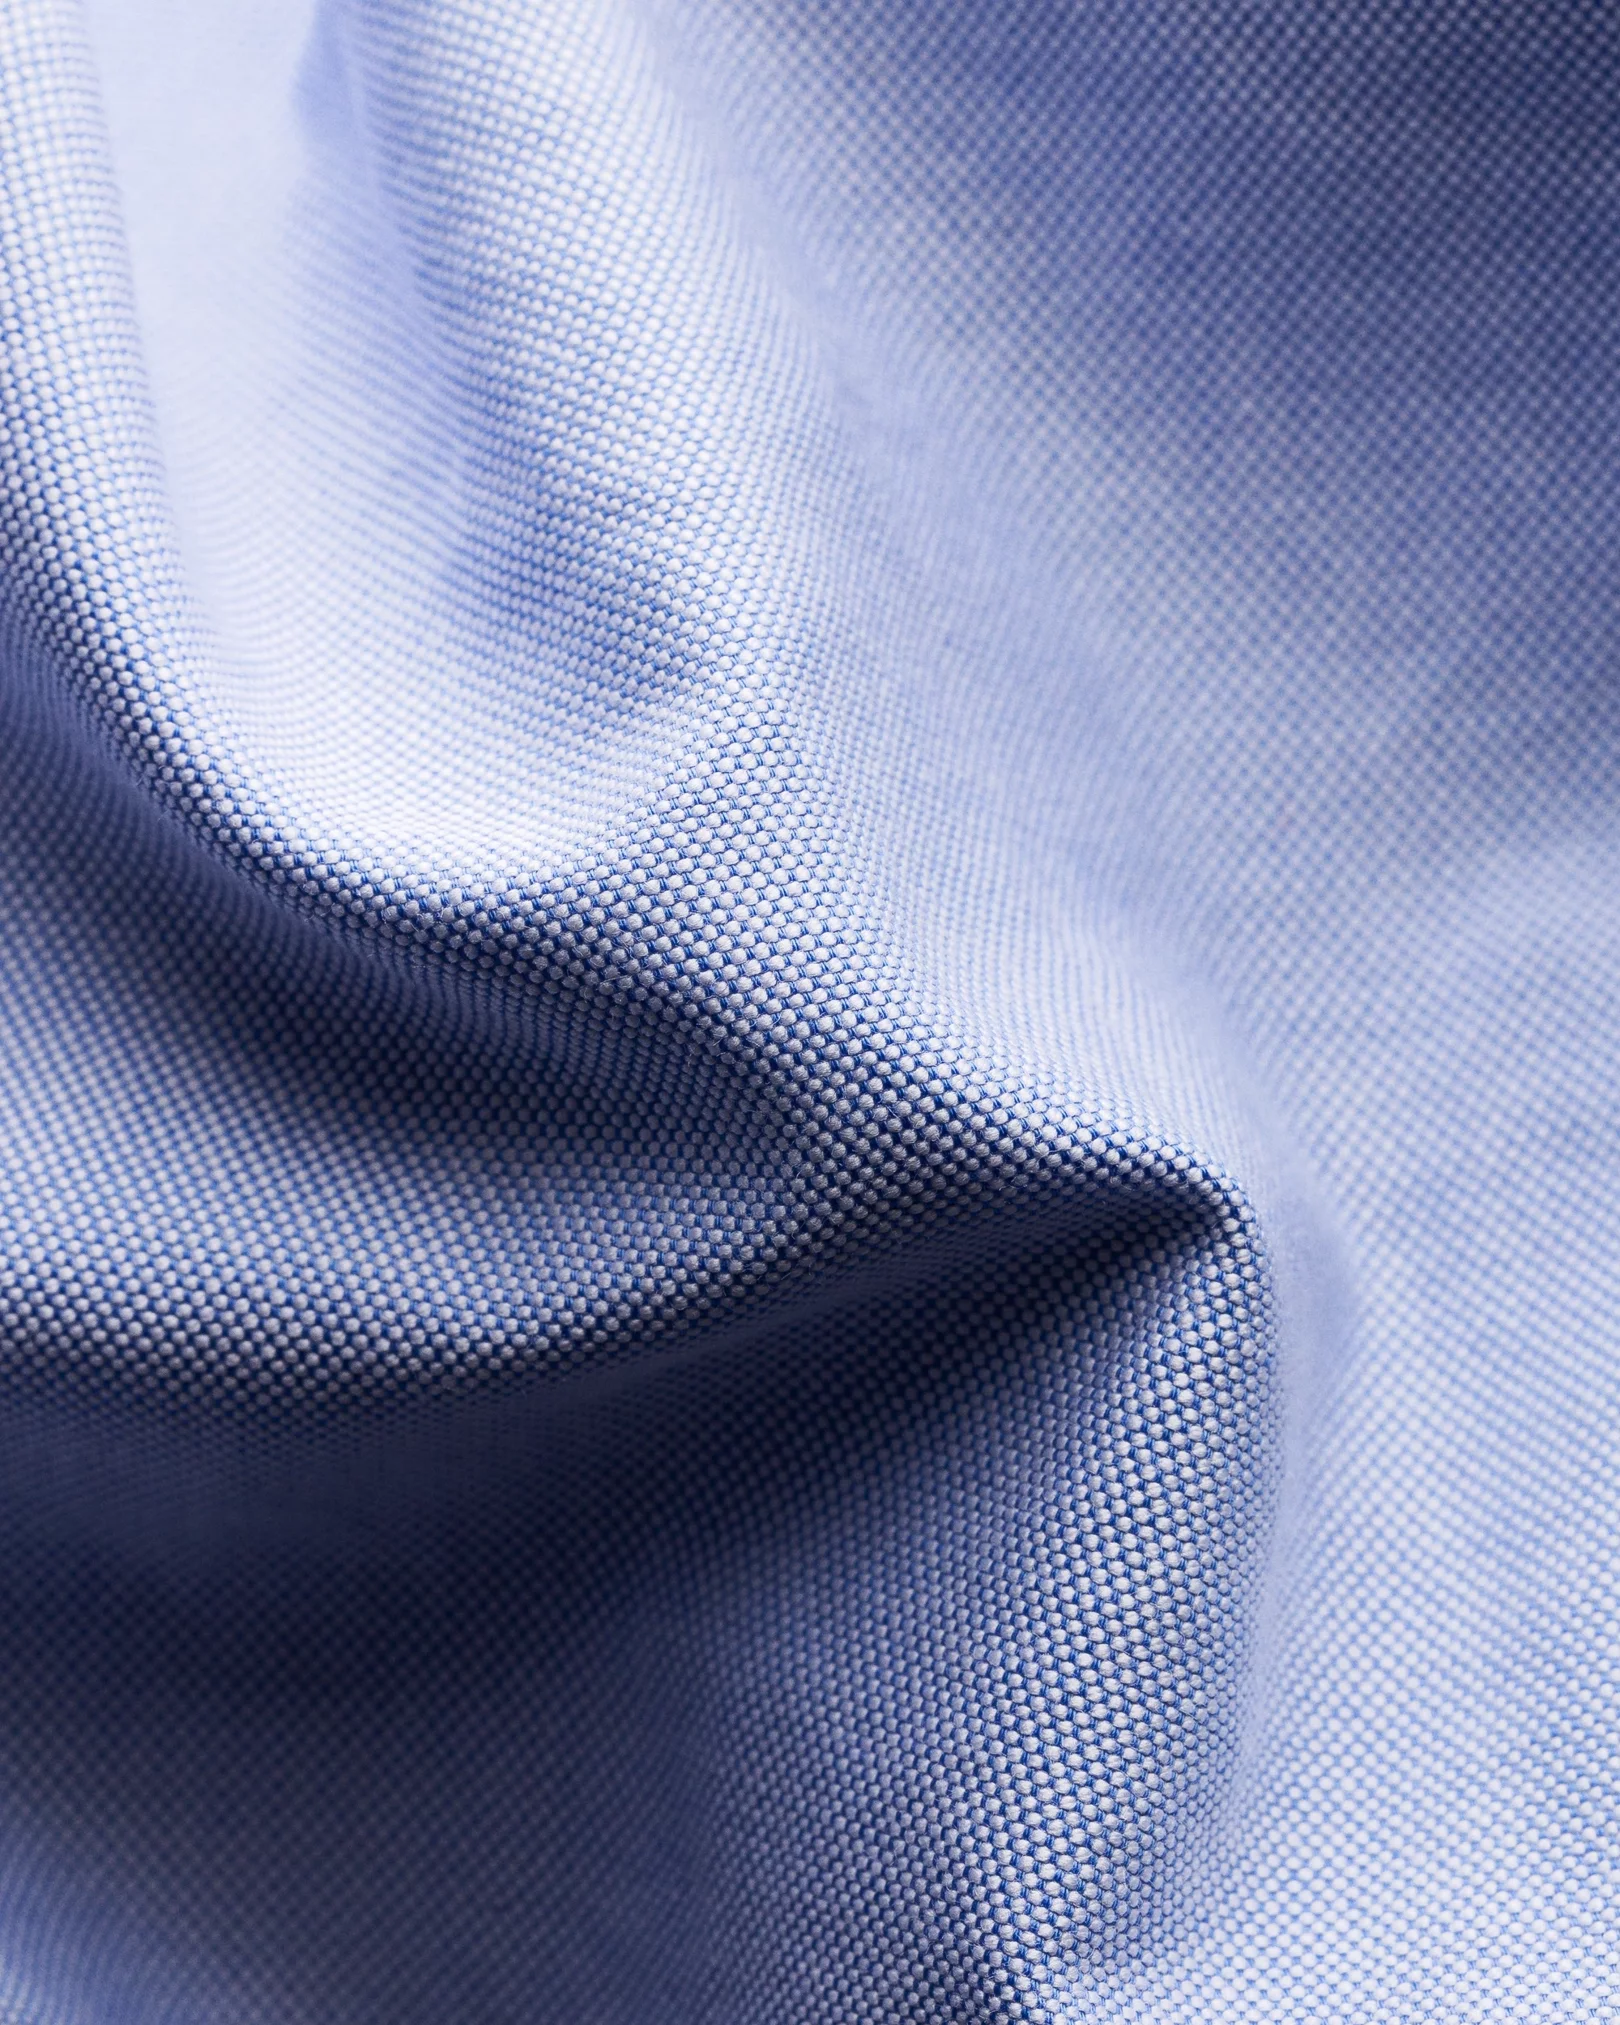 Eton - light blue oxford overshirt